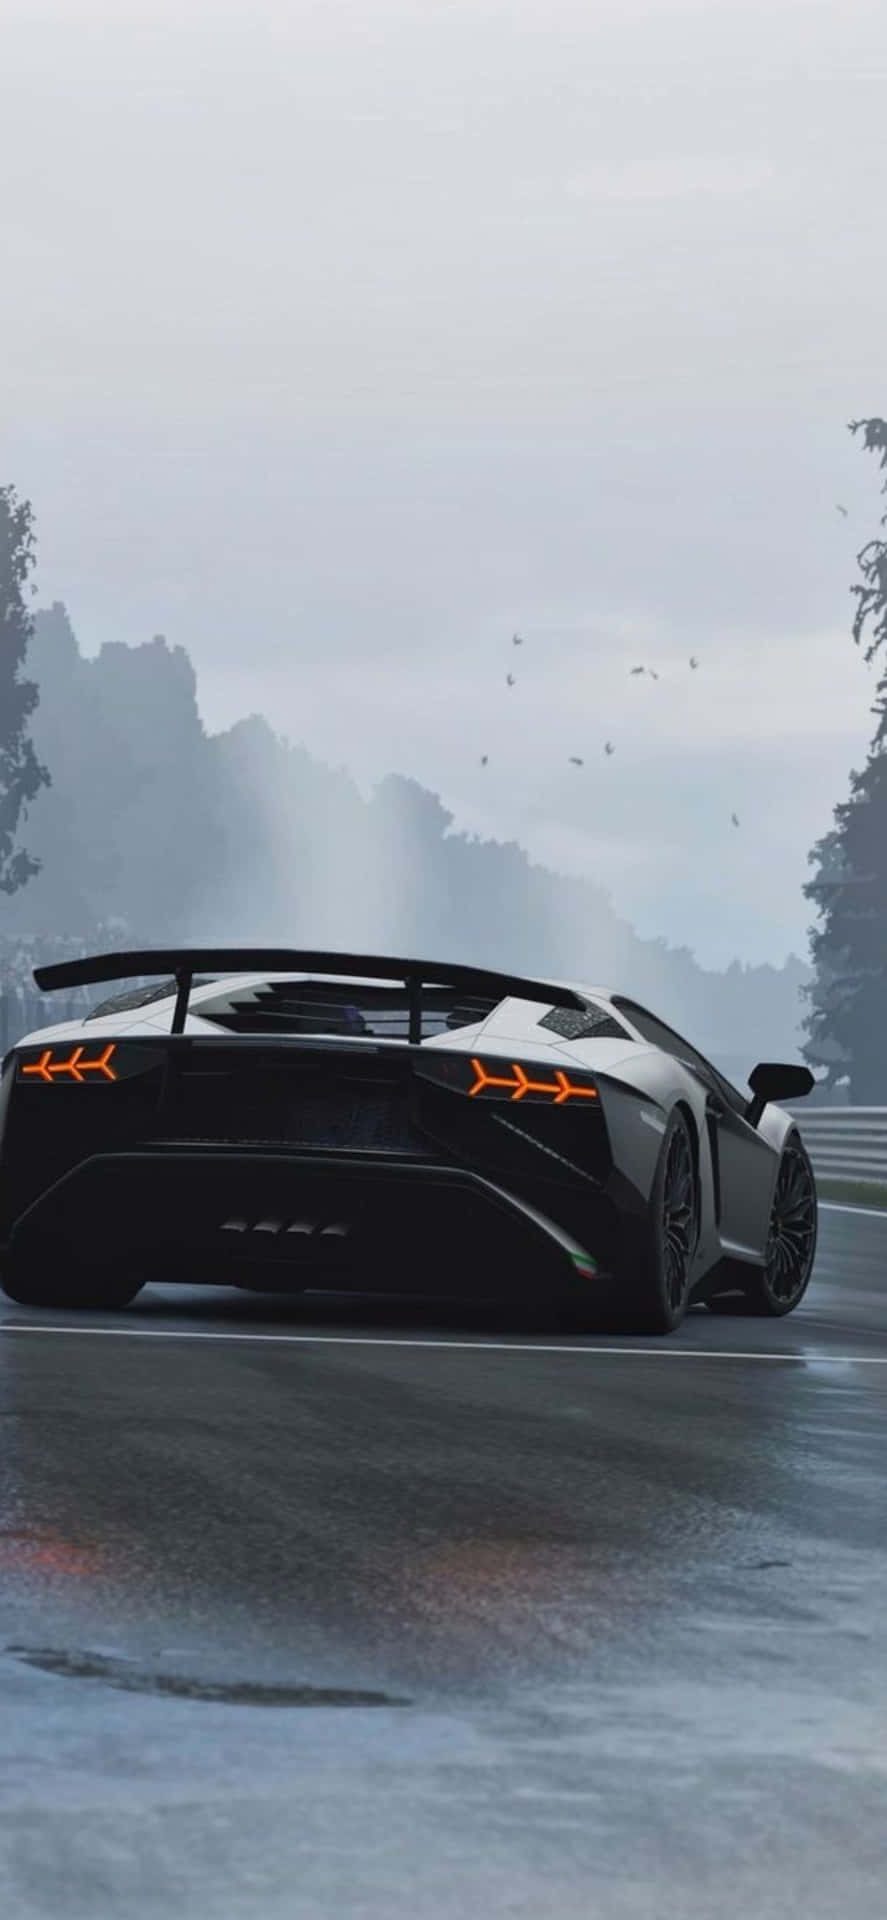 iPhone XS Max Lamborghini Aventador Black Rear Background